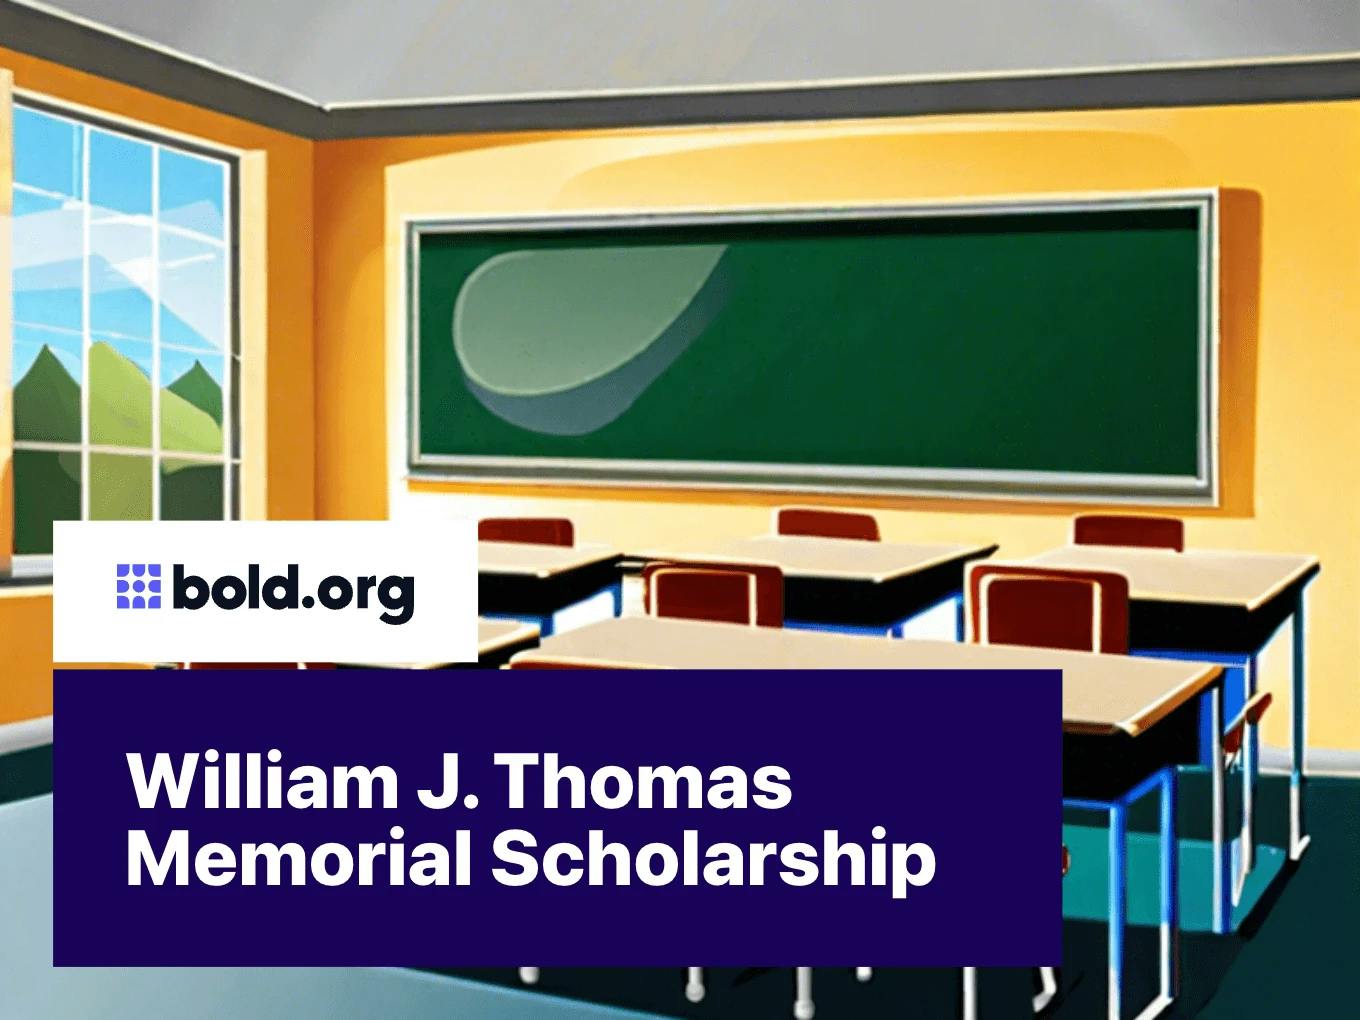 William J. Thomas Memorial Scholarship